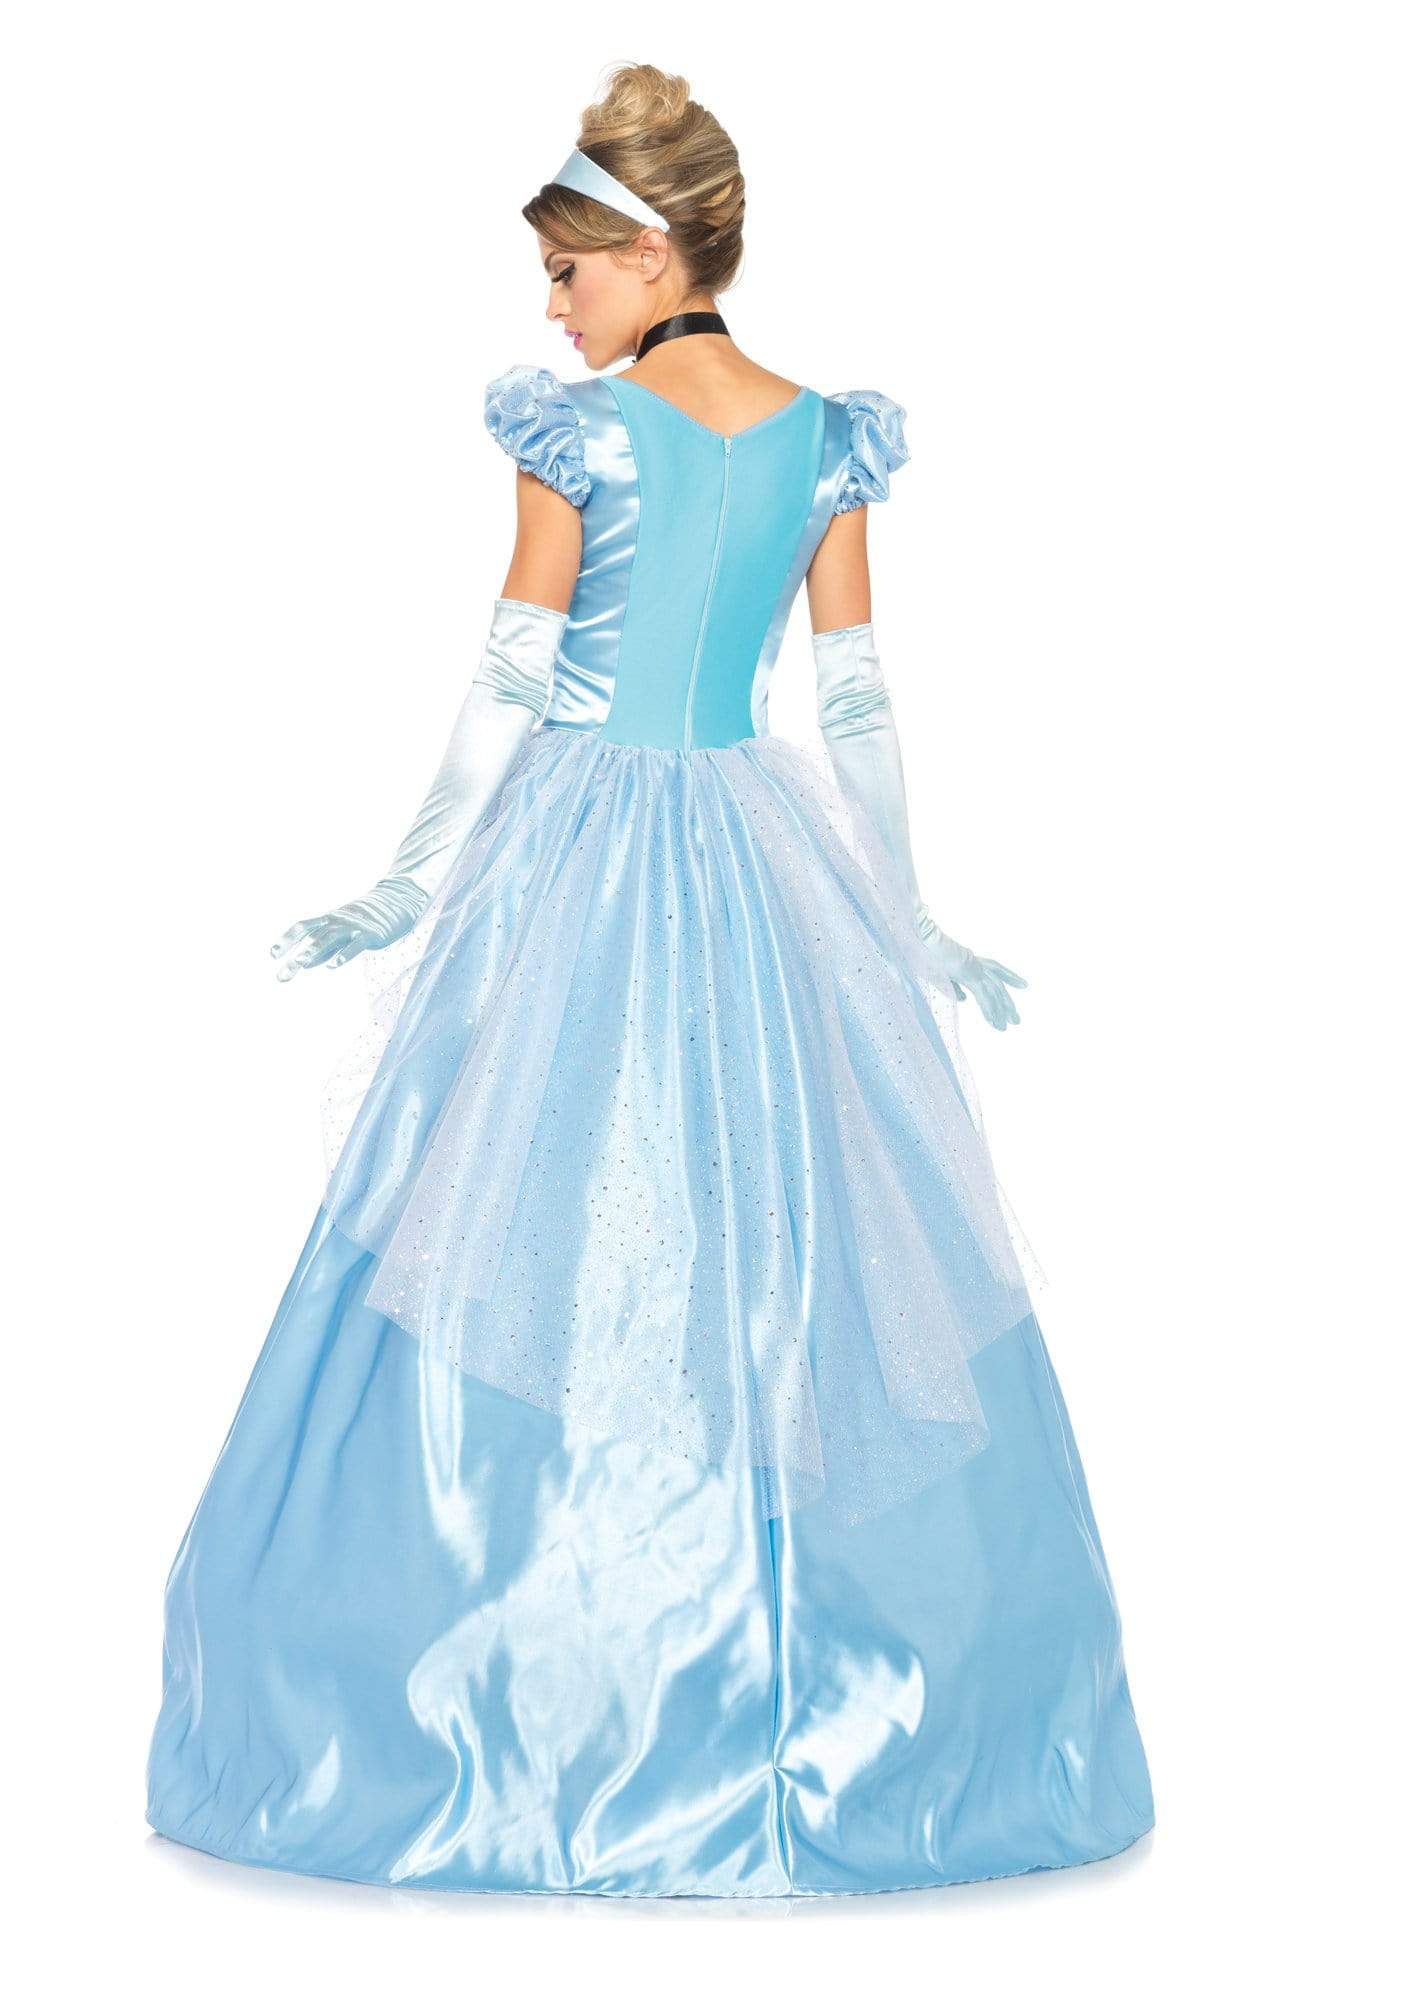 Women Cinderella Halloween Costume Disney Princess Cosplay Dress Takerlama